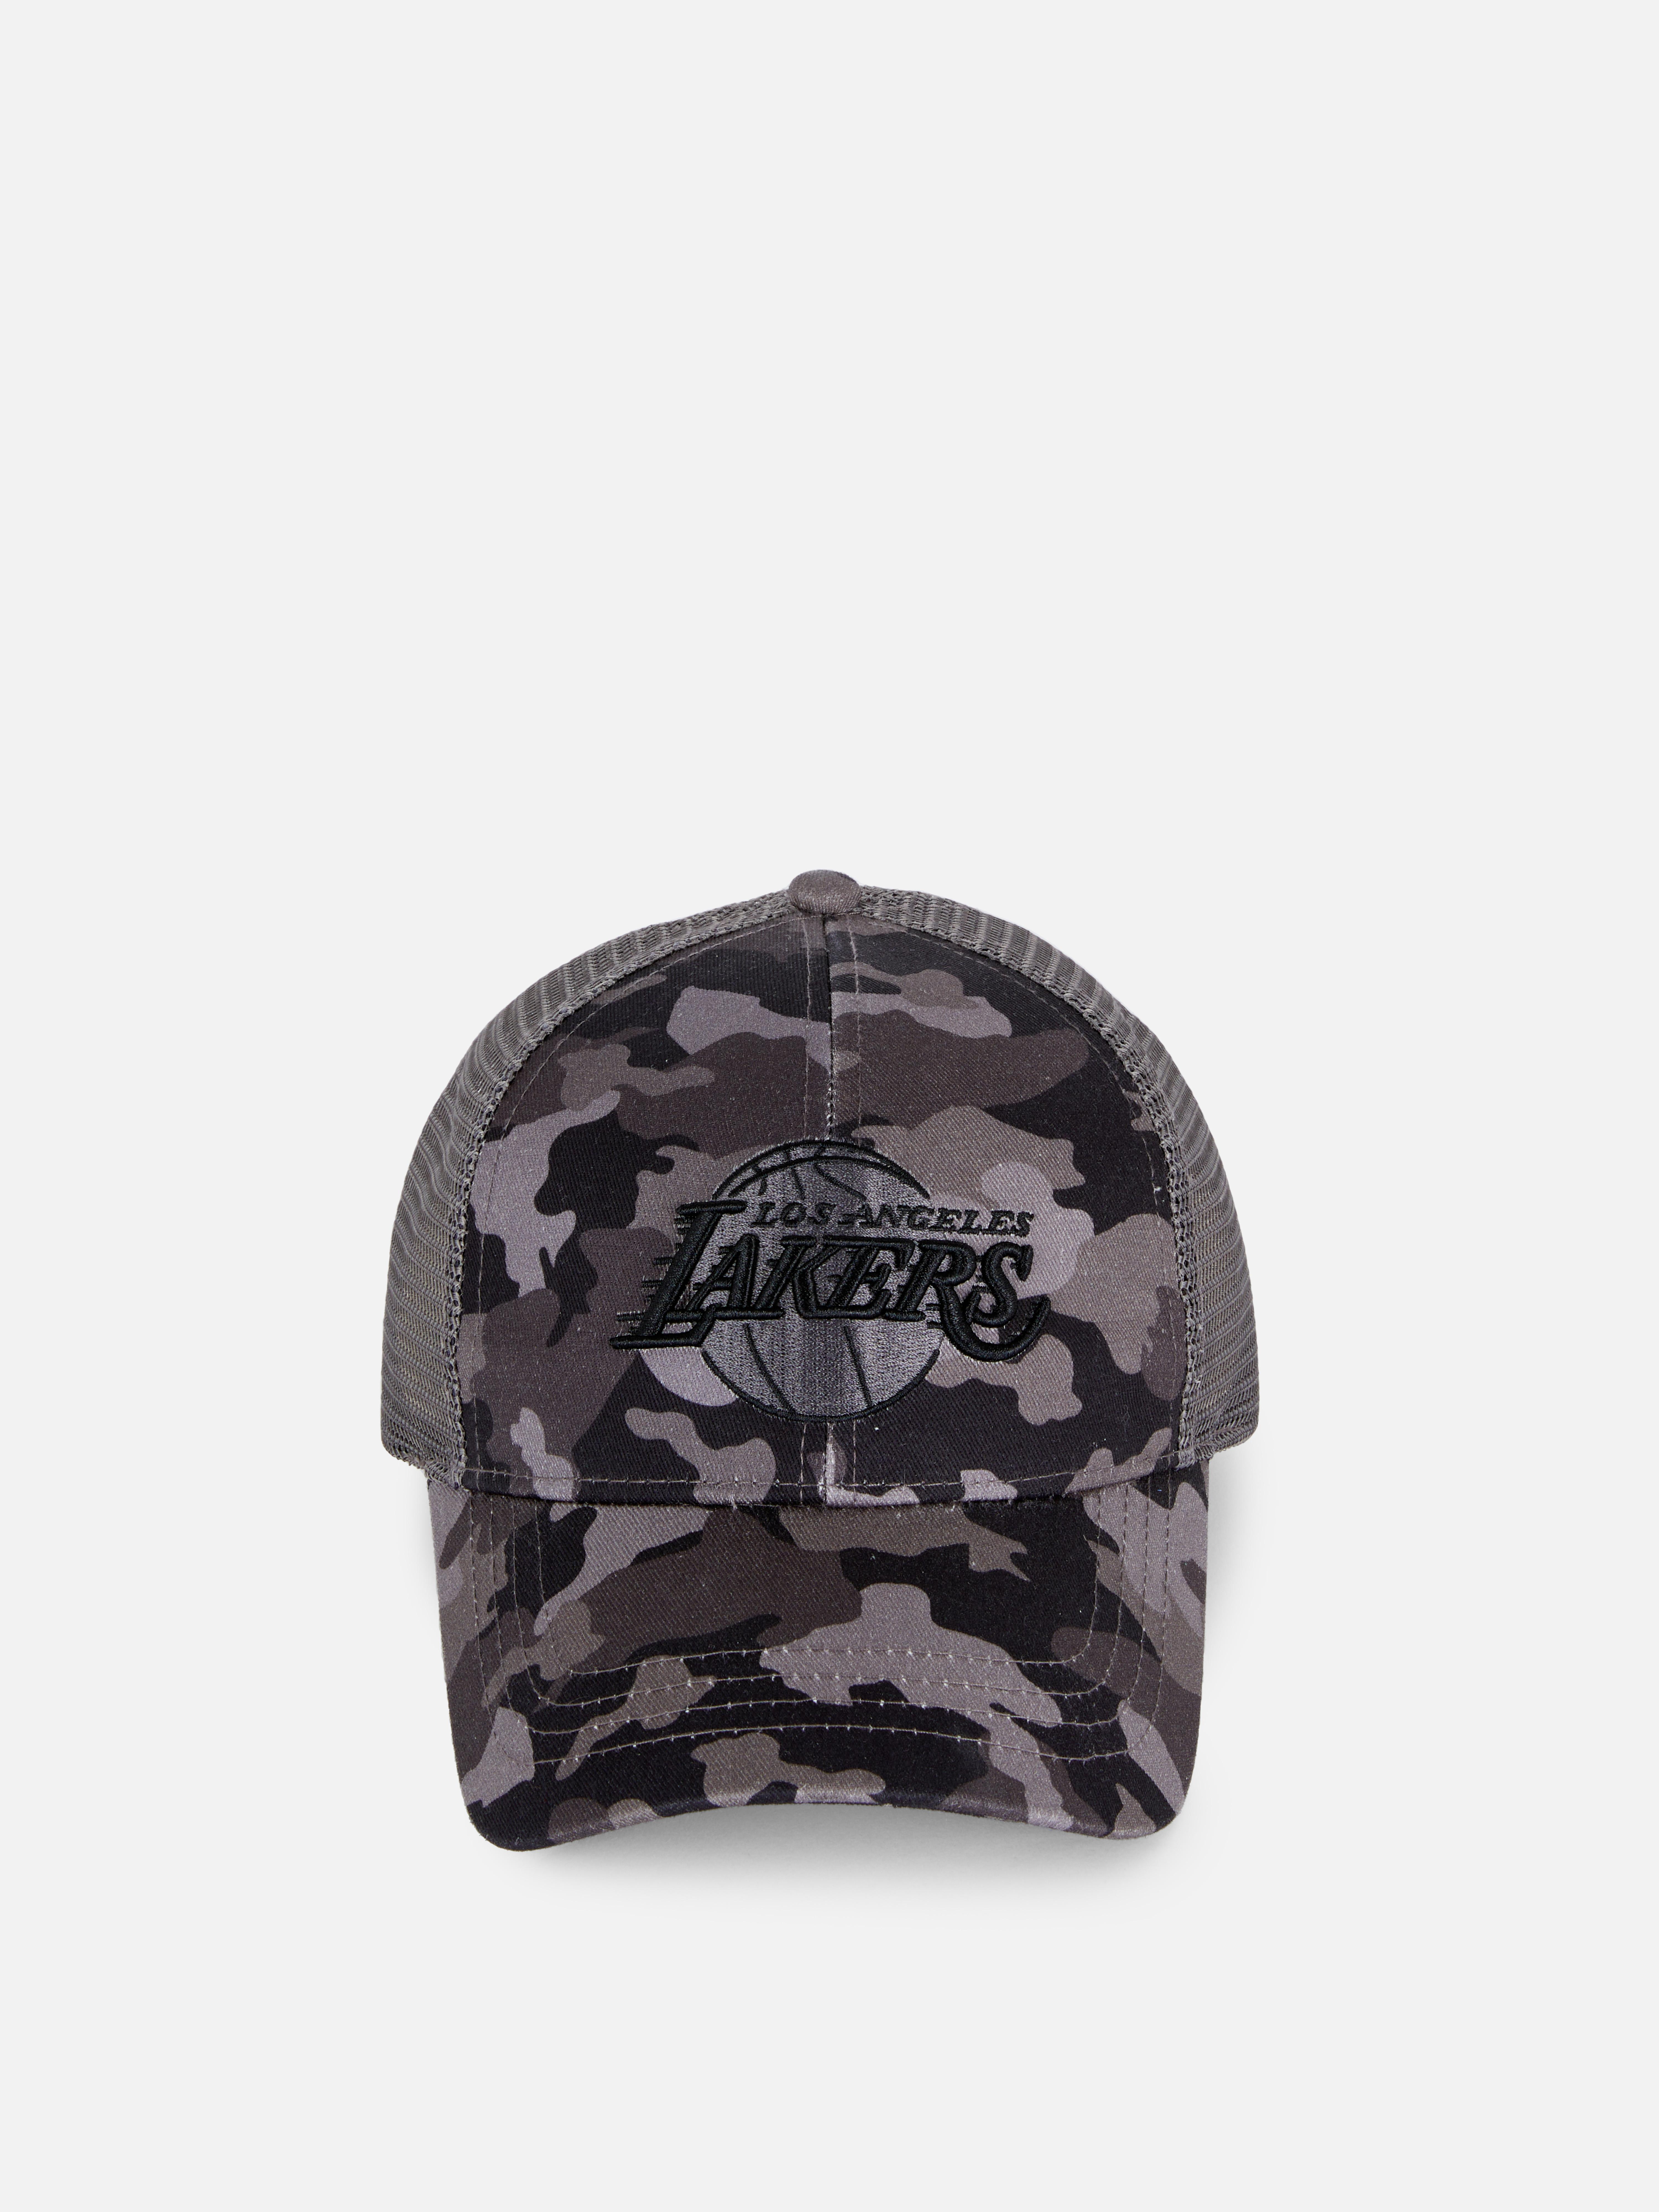 NBA LA Lakers Camouflage Cap